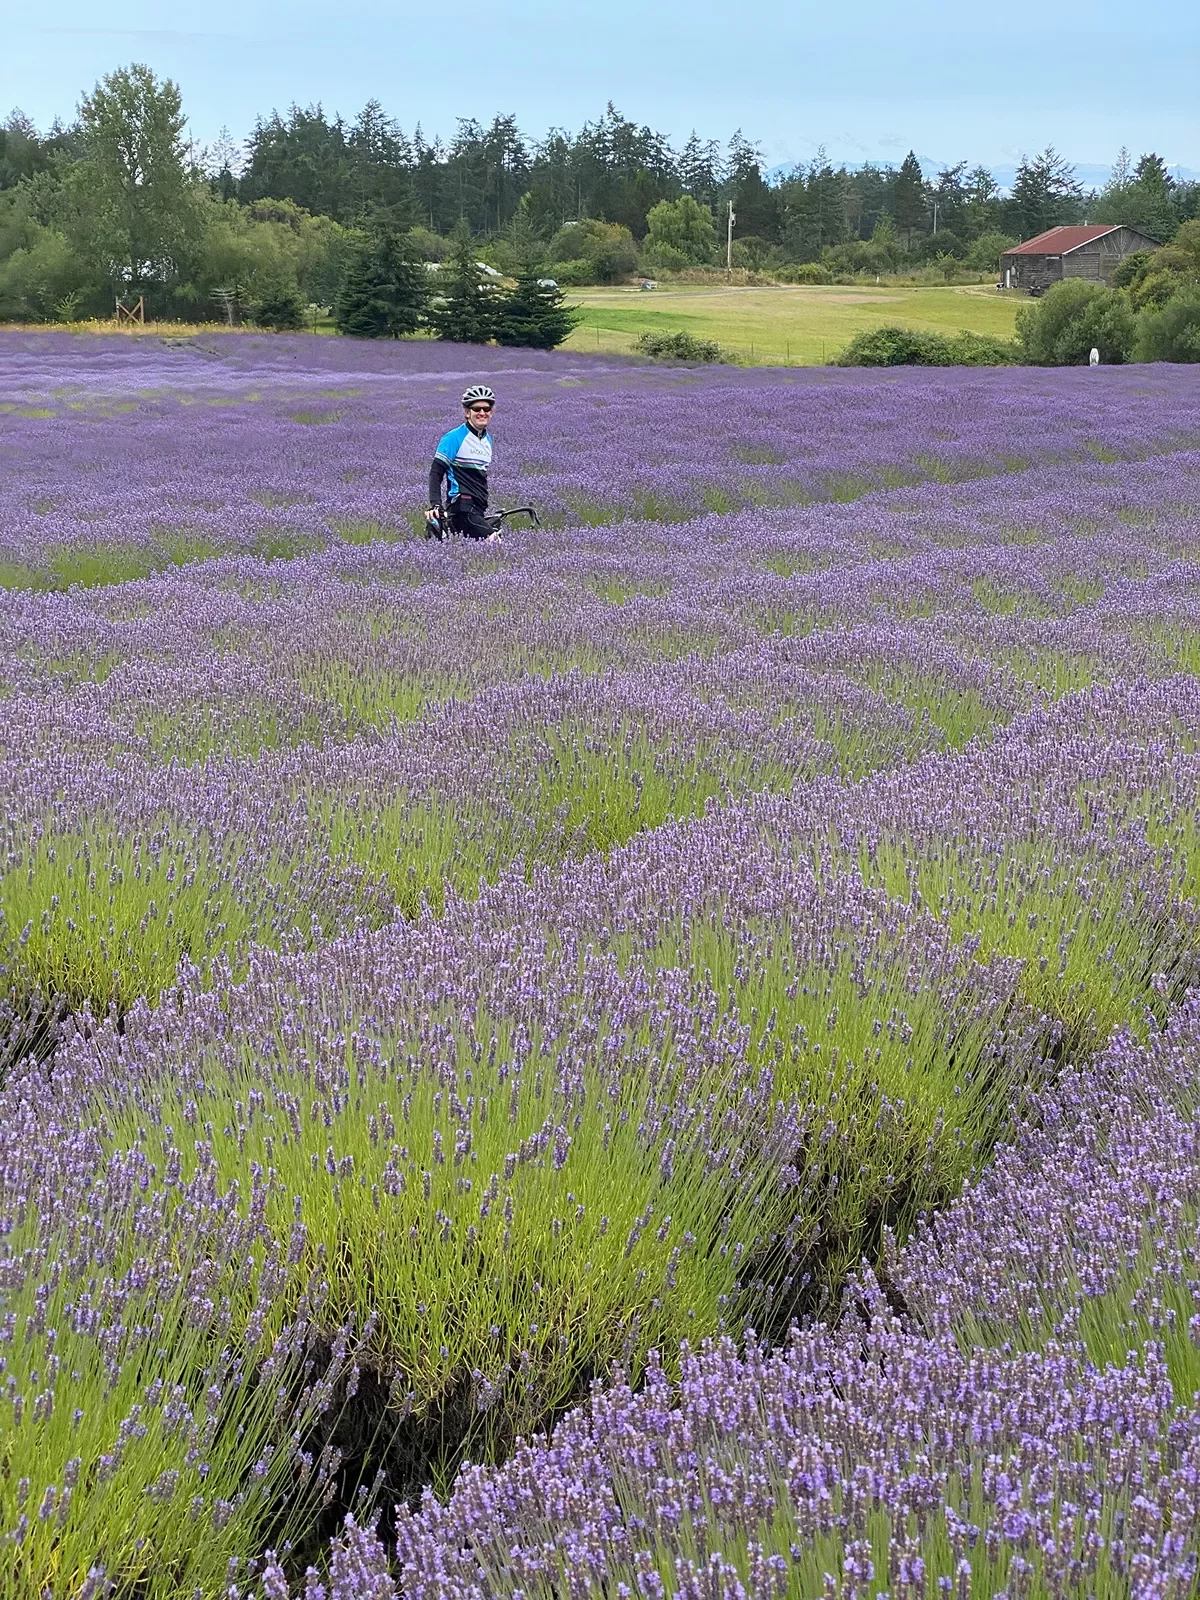 Guest among large lavender bushes.